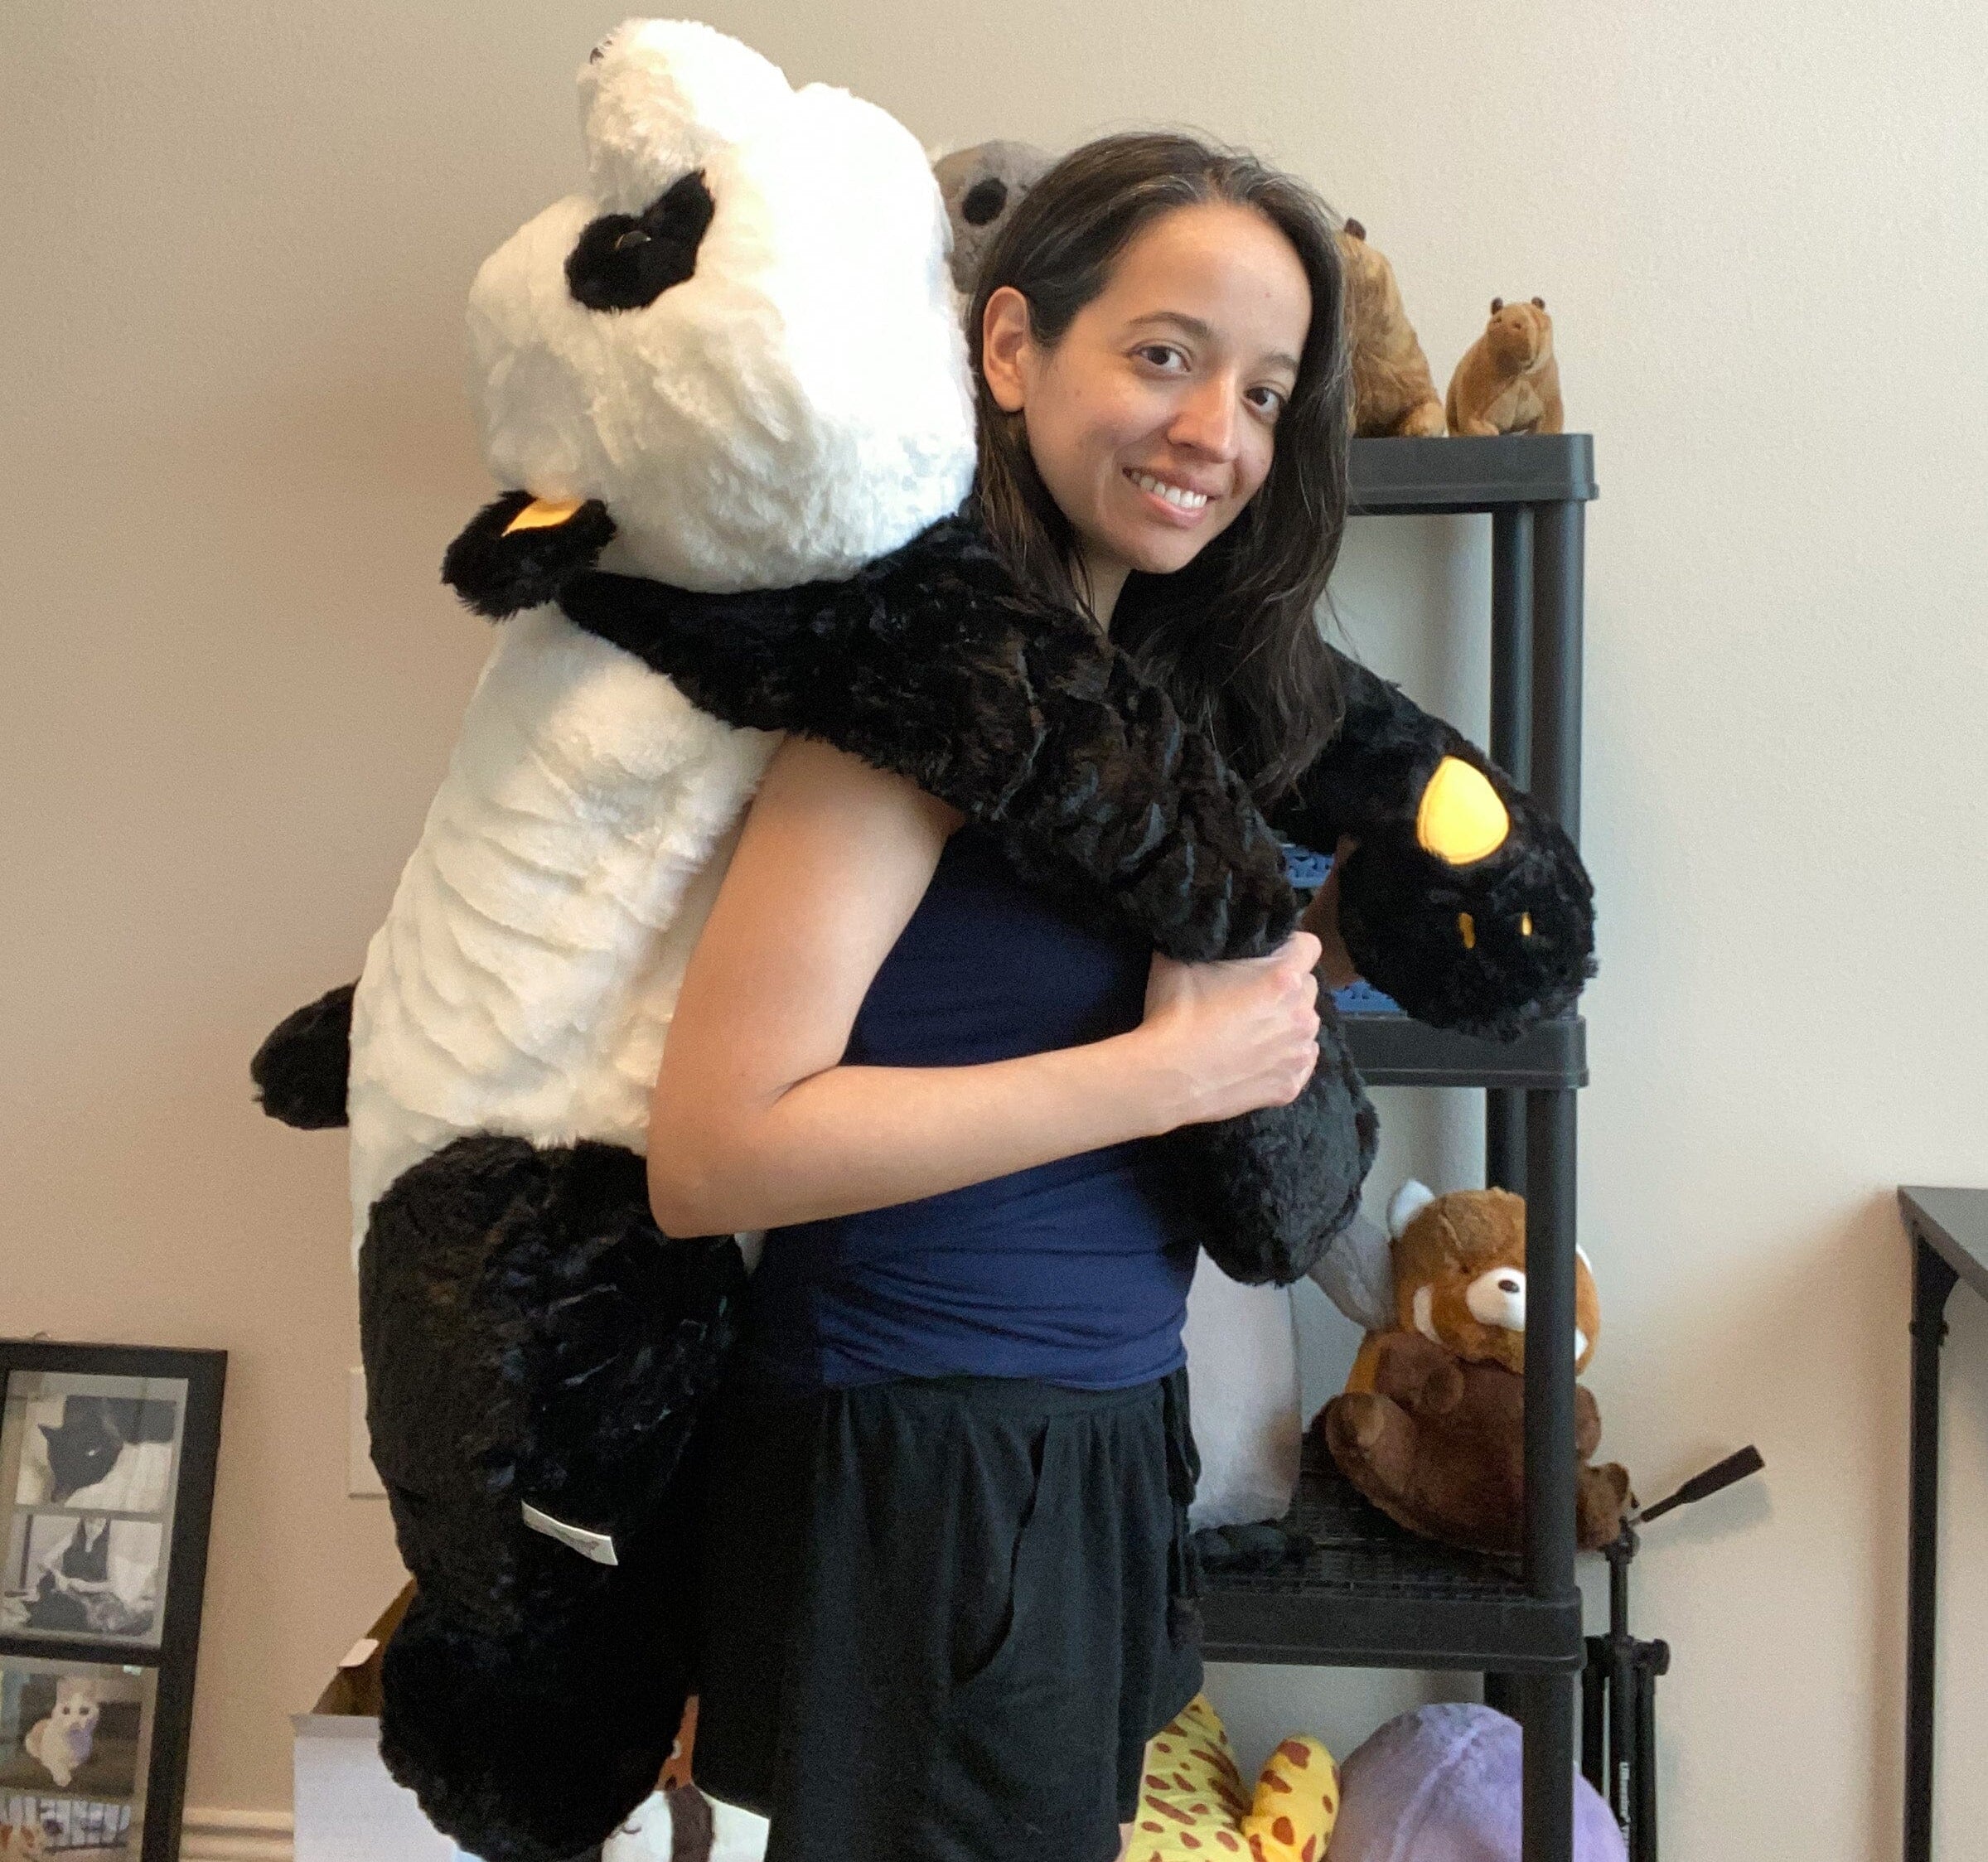 Panda Plush The Autistic Innovator Giant 